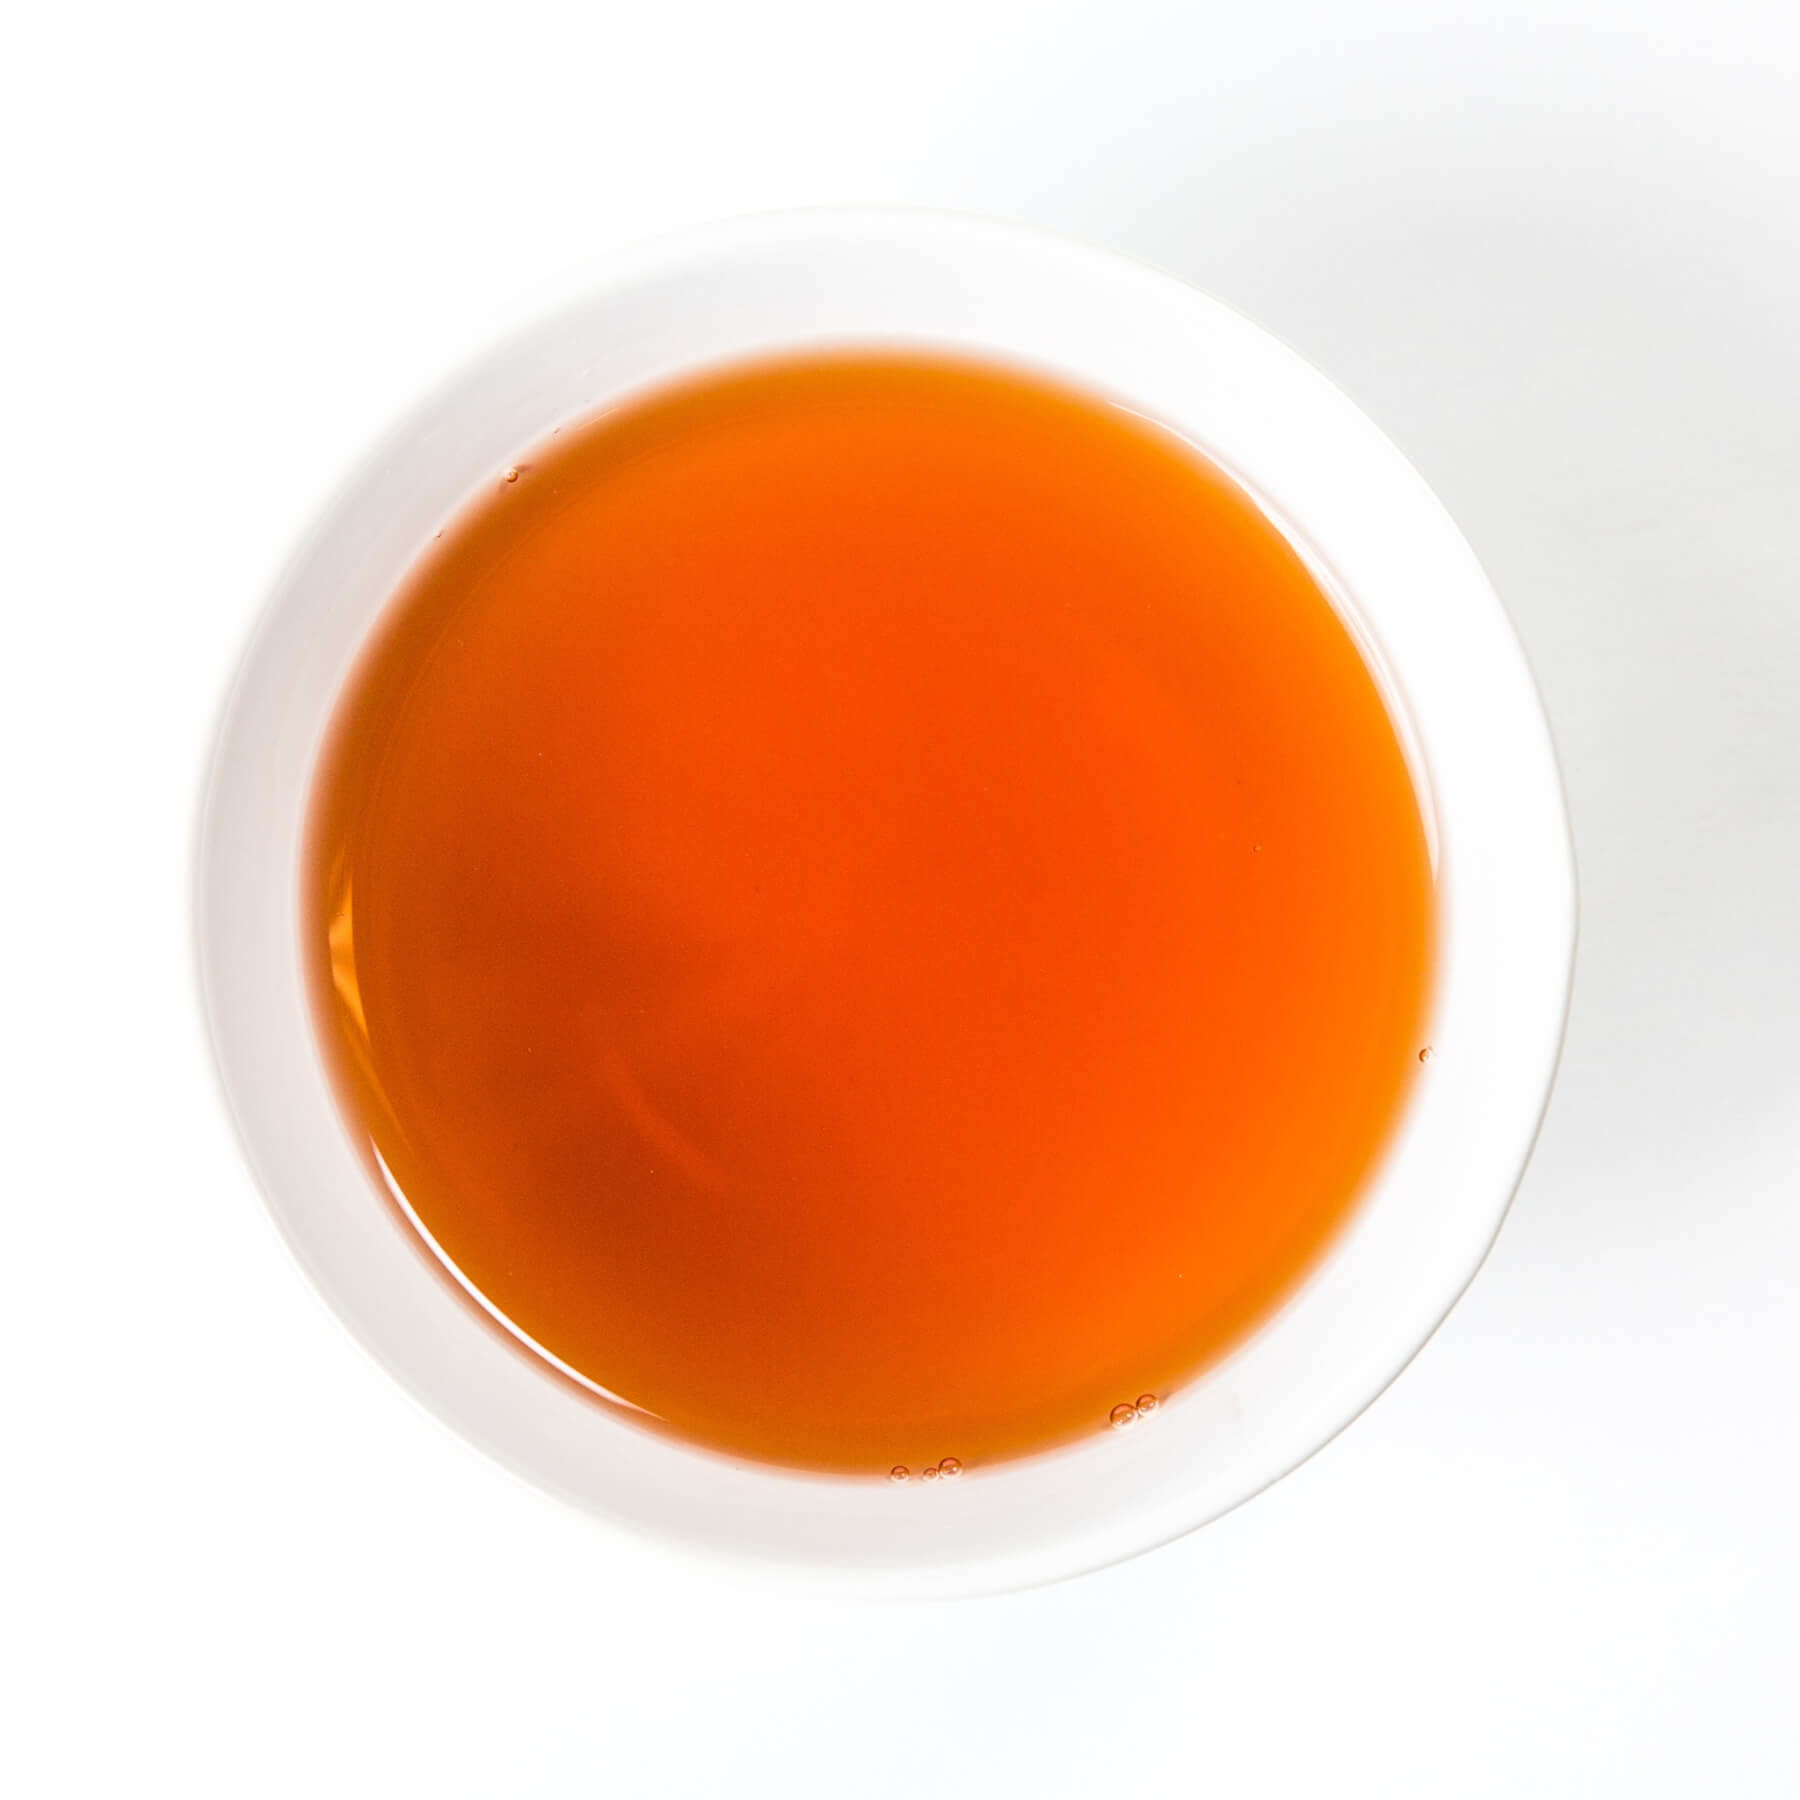 a small teacup of freshly brewed tea